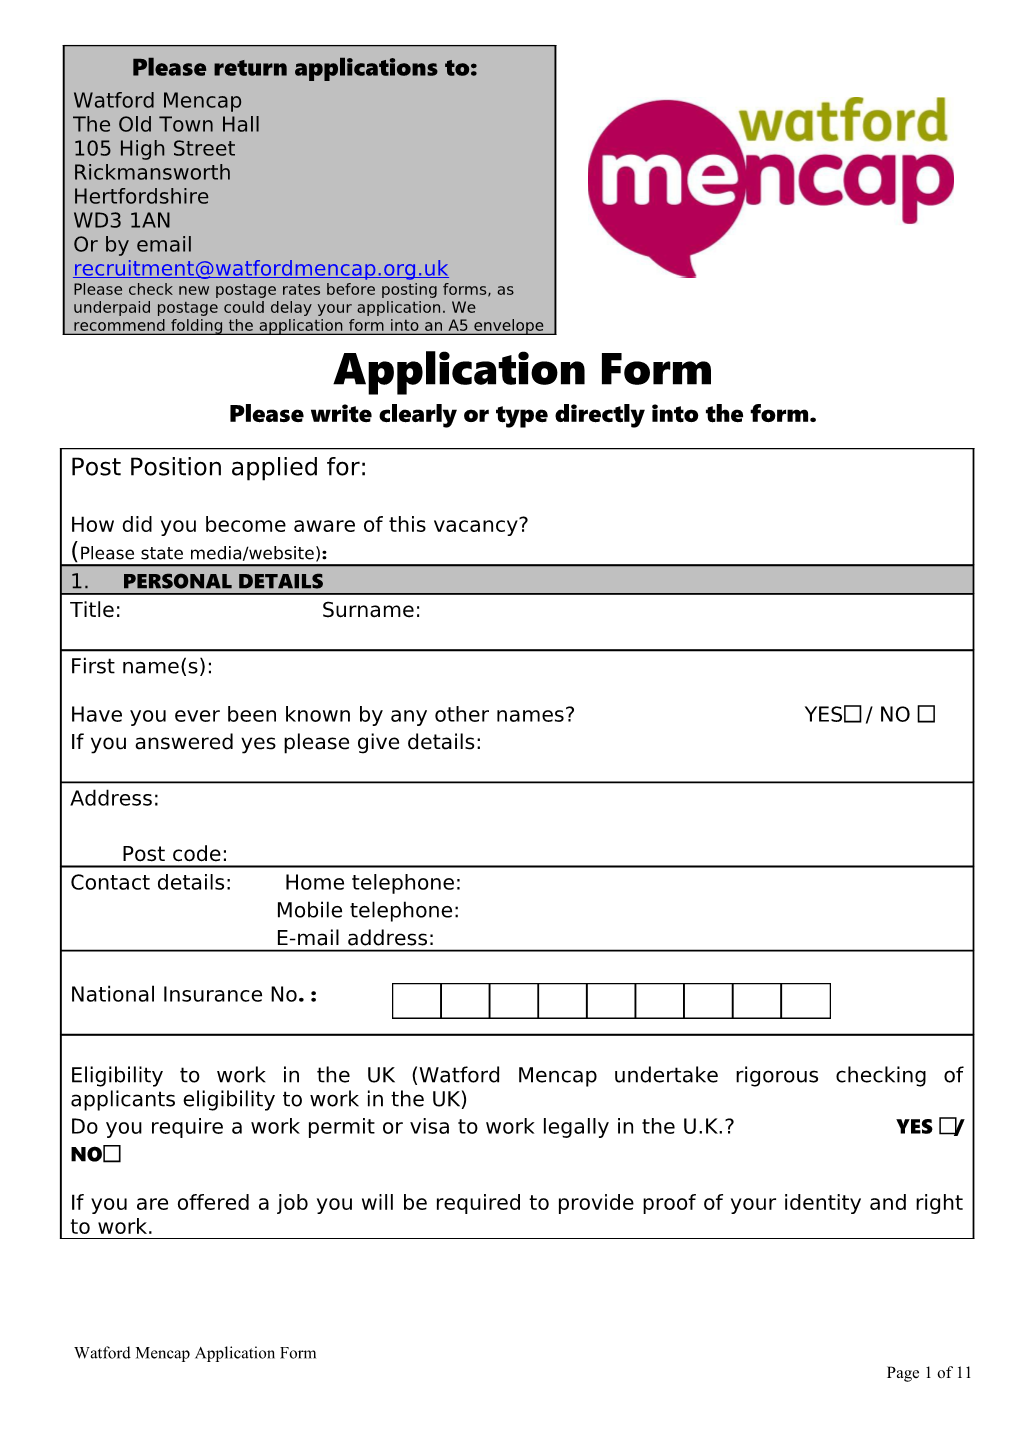 Watford Mencap Application Form